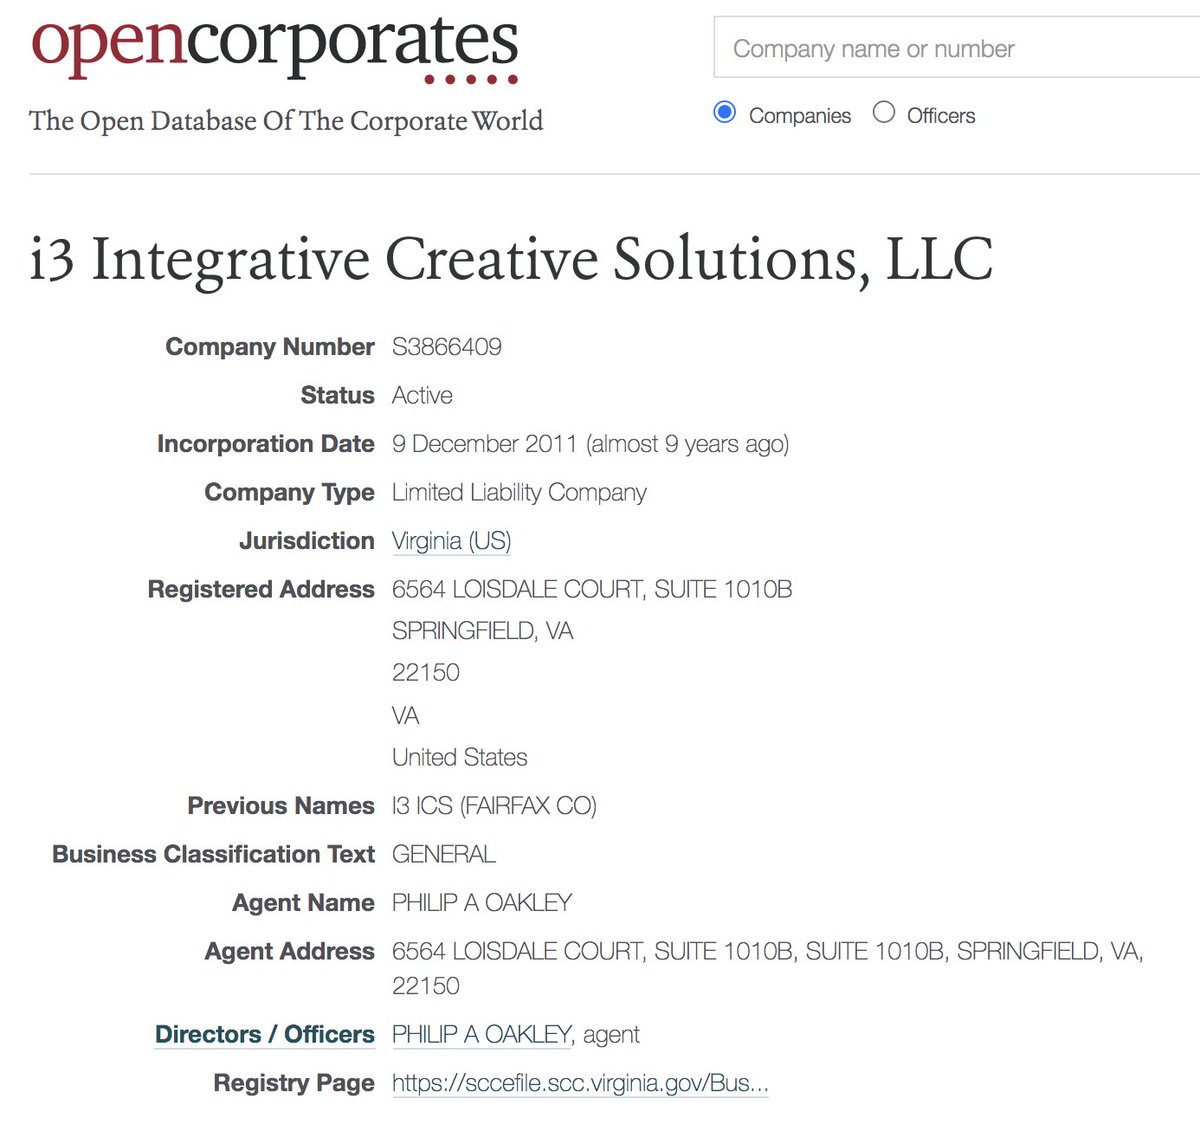 Michael Flynn was a consultant for Phil Oakley's I3 Integrative Creative Solutions, LLC https://projects.propublica.org/trump-town/organizations/i3-integrative-creative-solutions-llc https://opencorporates.com/companies/us_va/S3866409